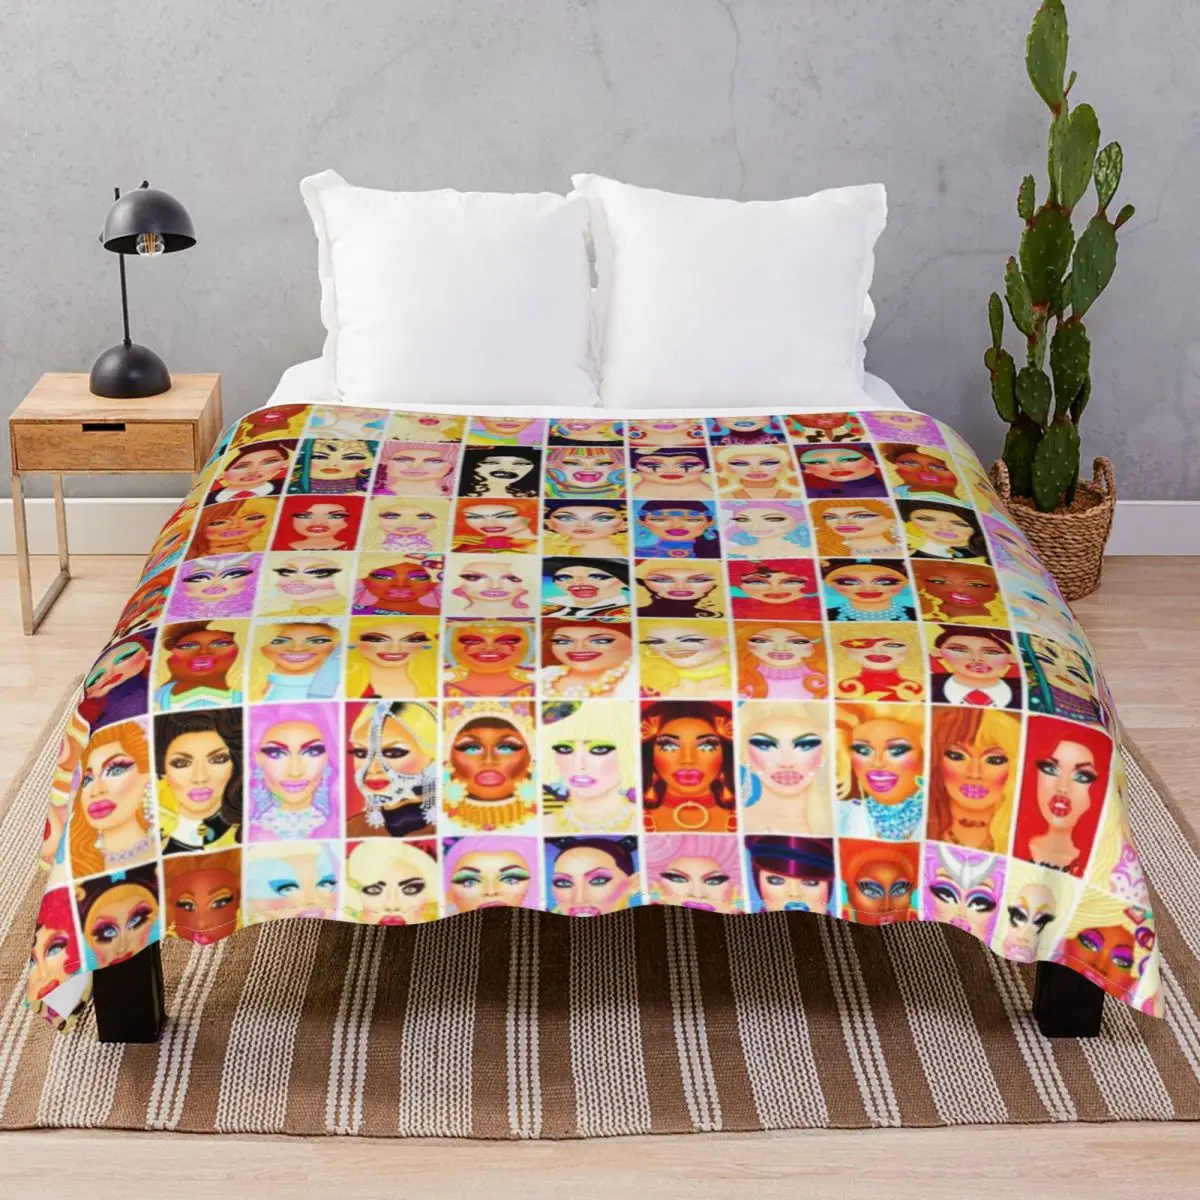 DRAG QUEEN ROYALTY Blanket Fleece Plush Print Multi-function Throw Blankets for Bed Sofa Travel Cinema